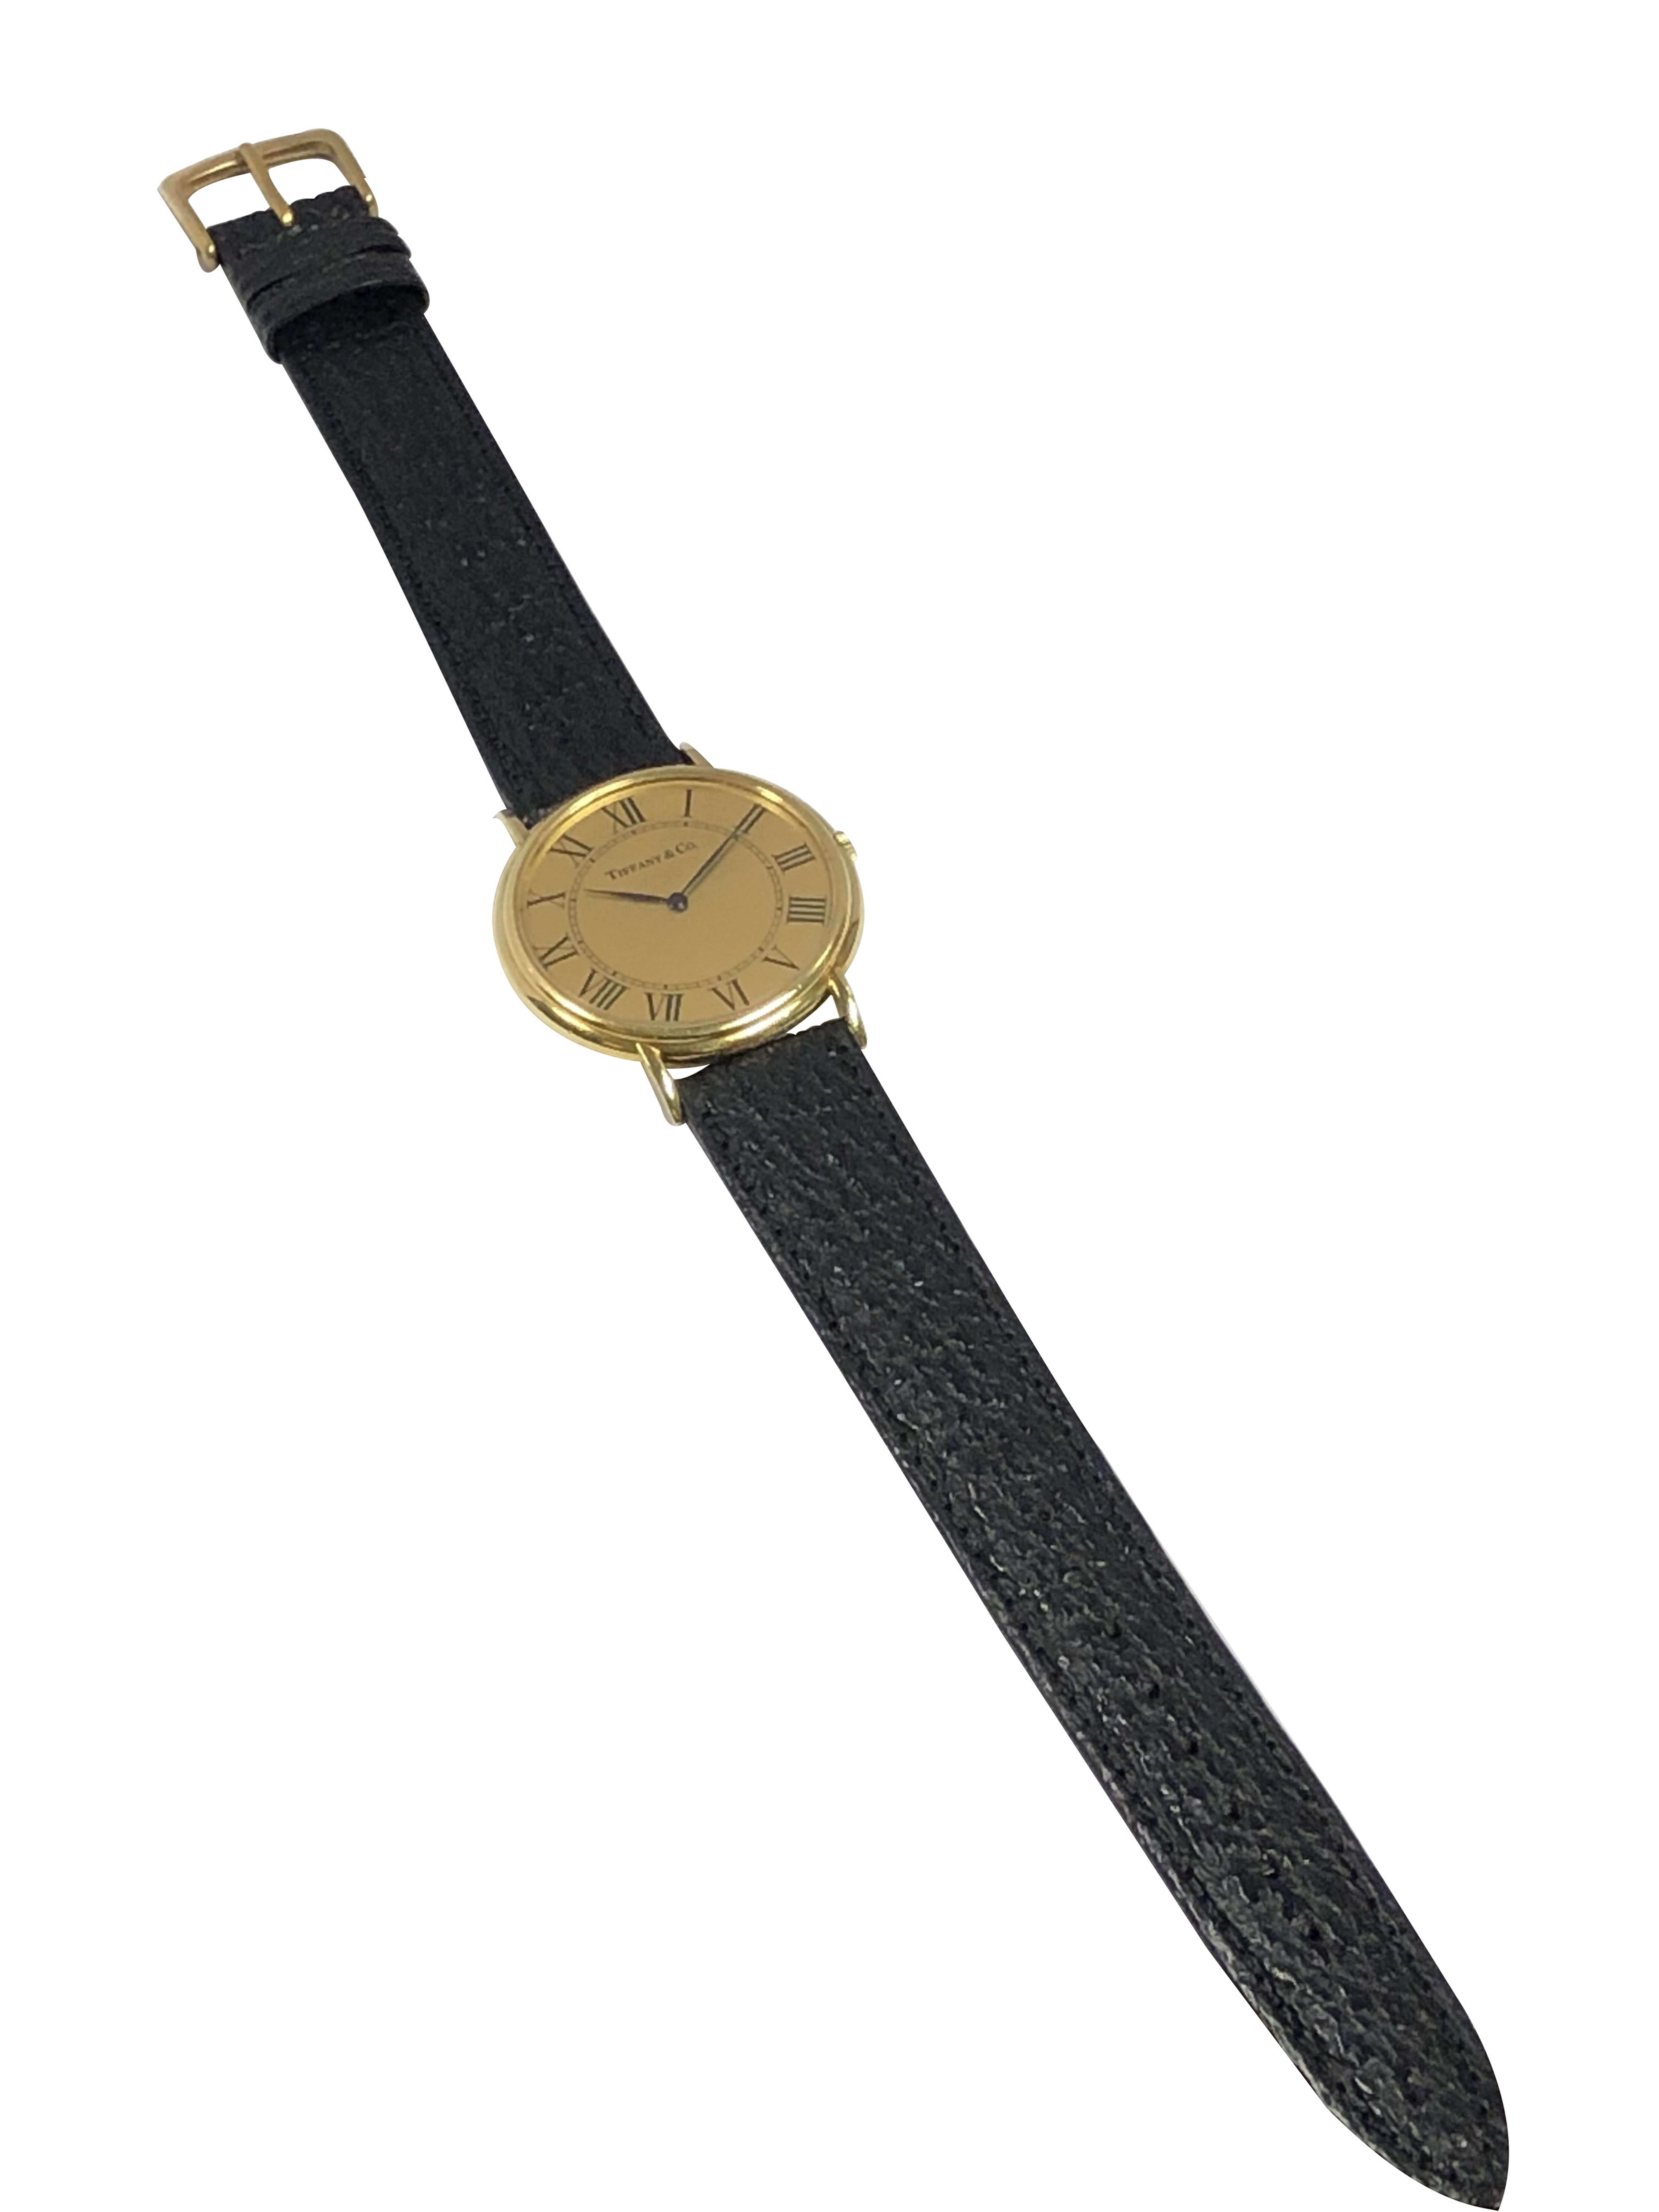 Tiffany & Co Movado Yellow Gold Gents Mechanical Wrist Watch 2